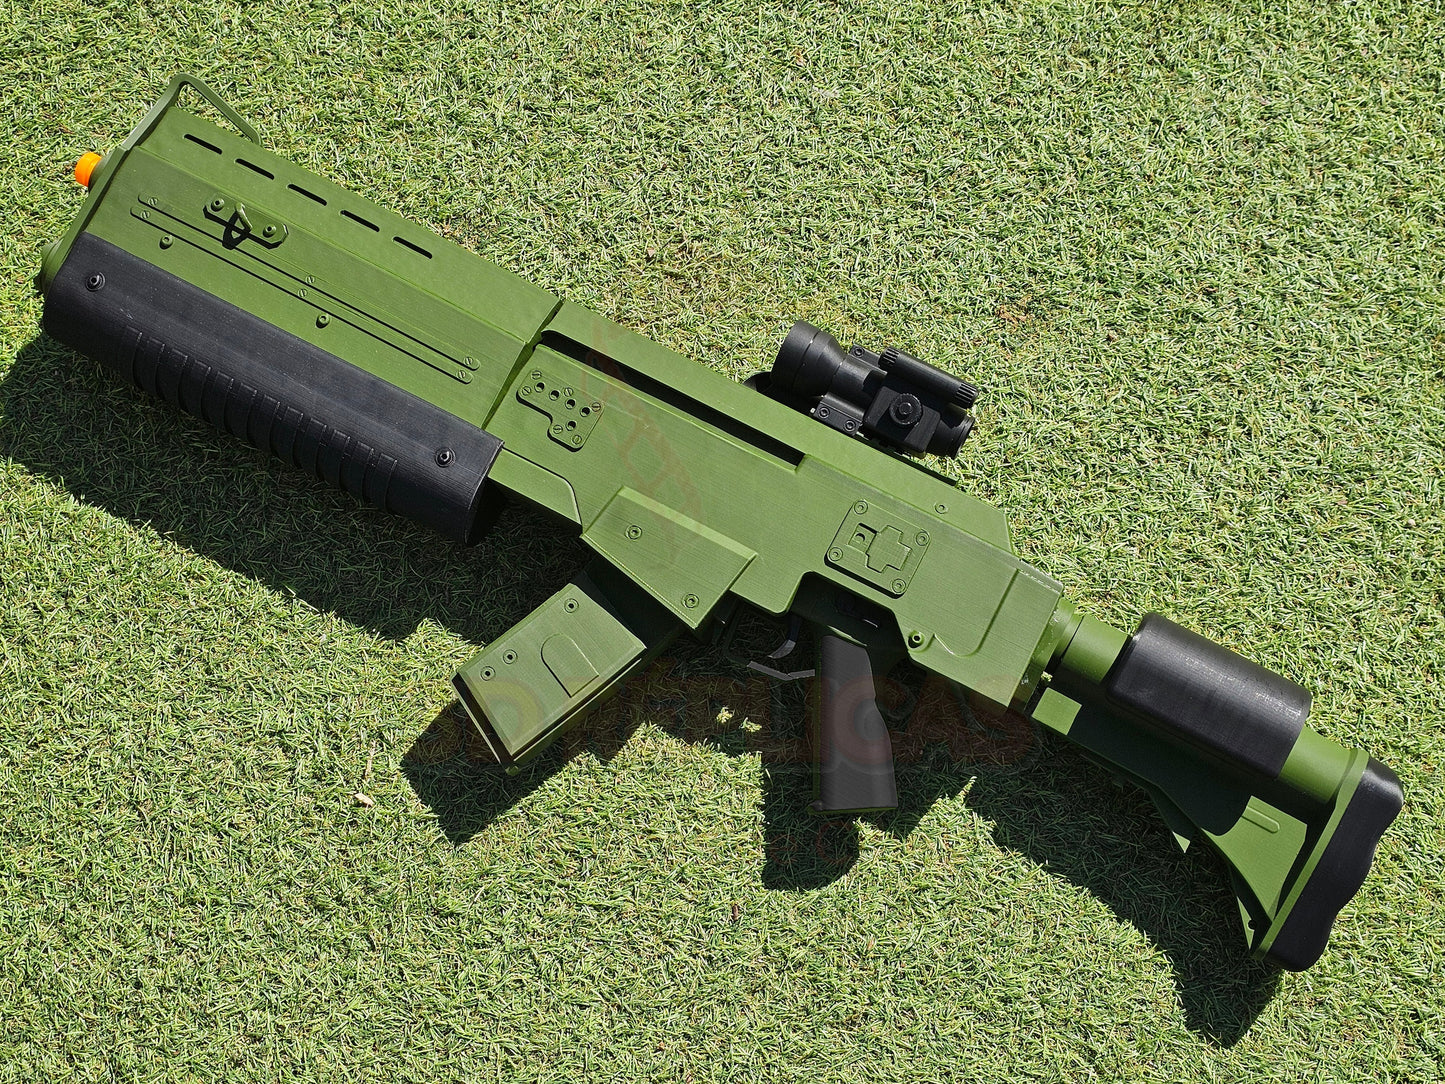 Doom G36 "Sarge" Assault Rifle Prop Replica Gun - by DreamofProps